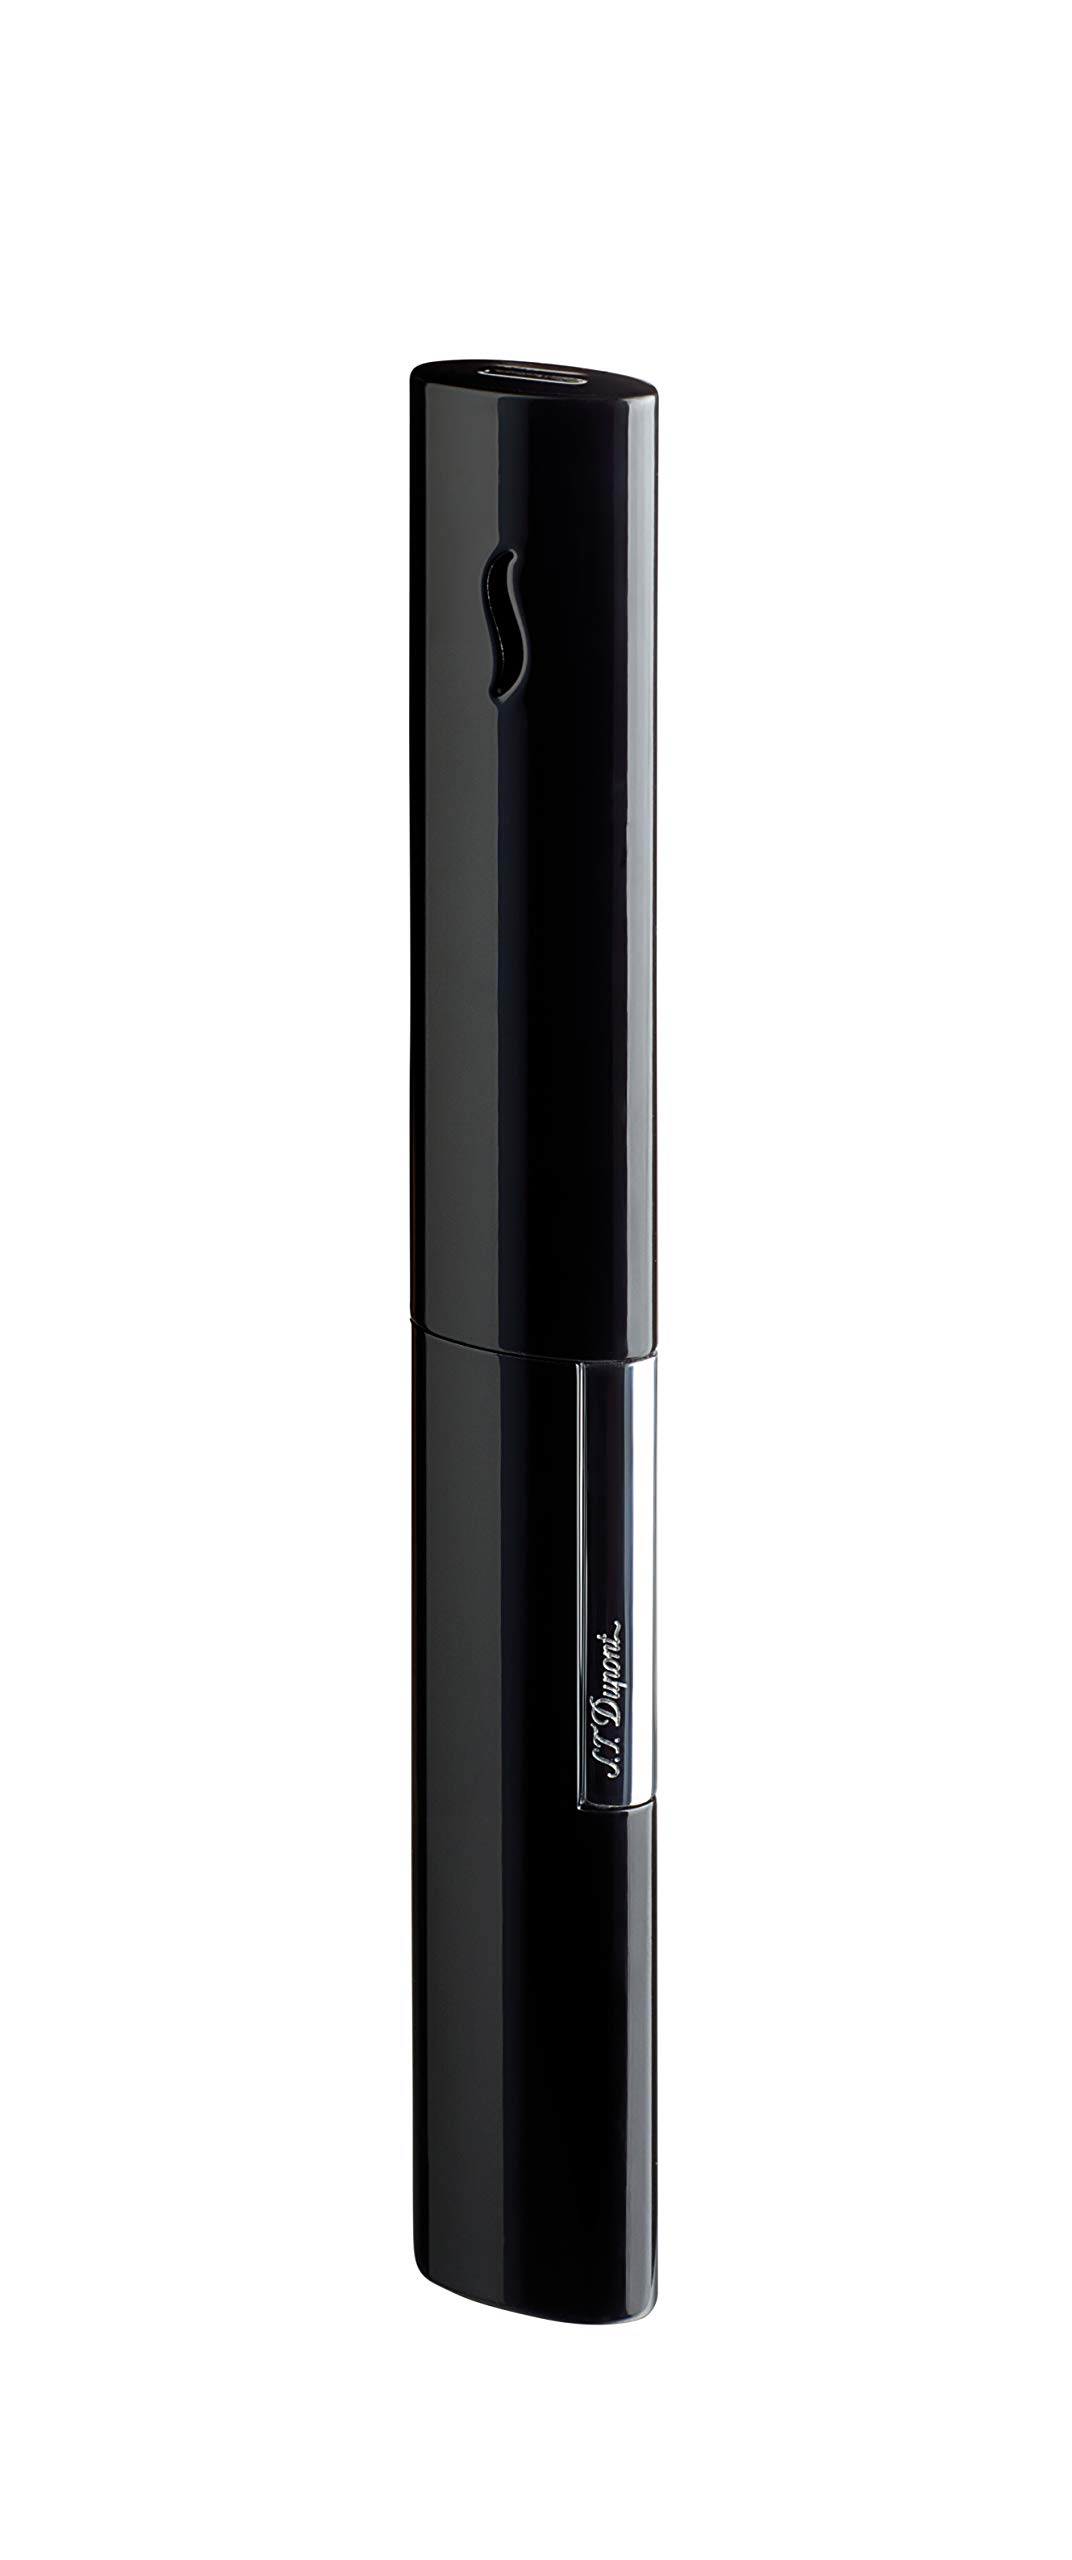 S.T.Dupont D-024005 The Wand Lighter - Black/Chrome